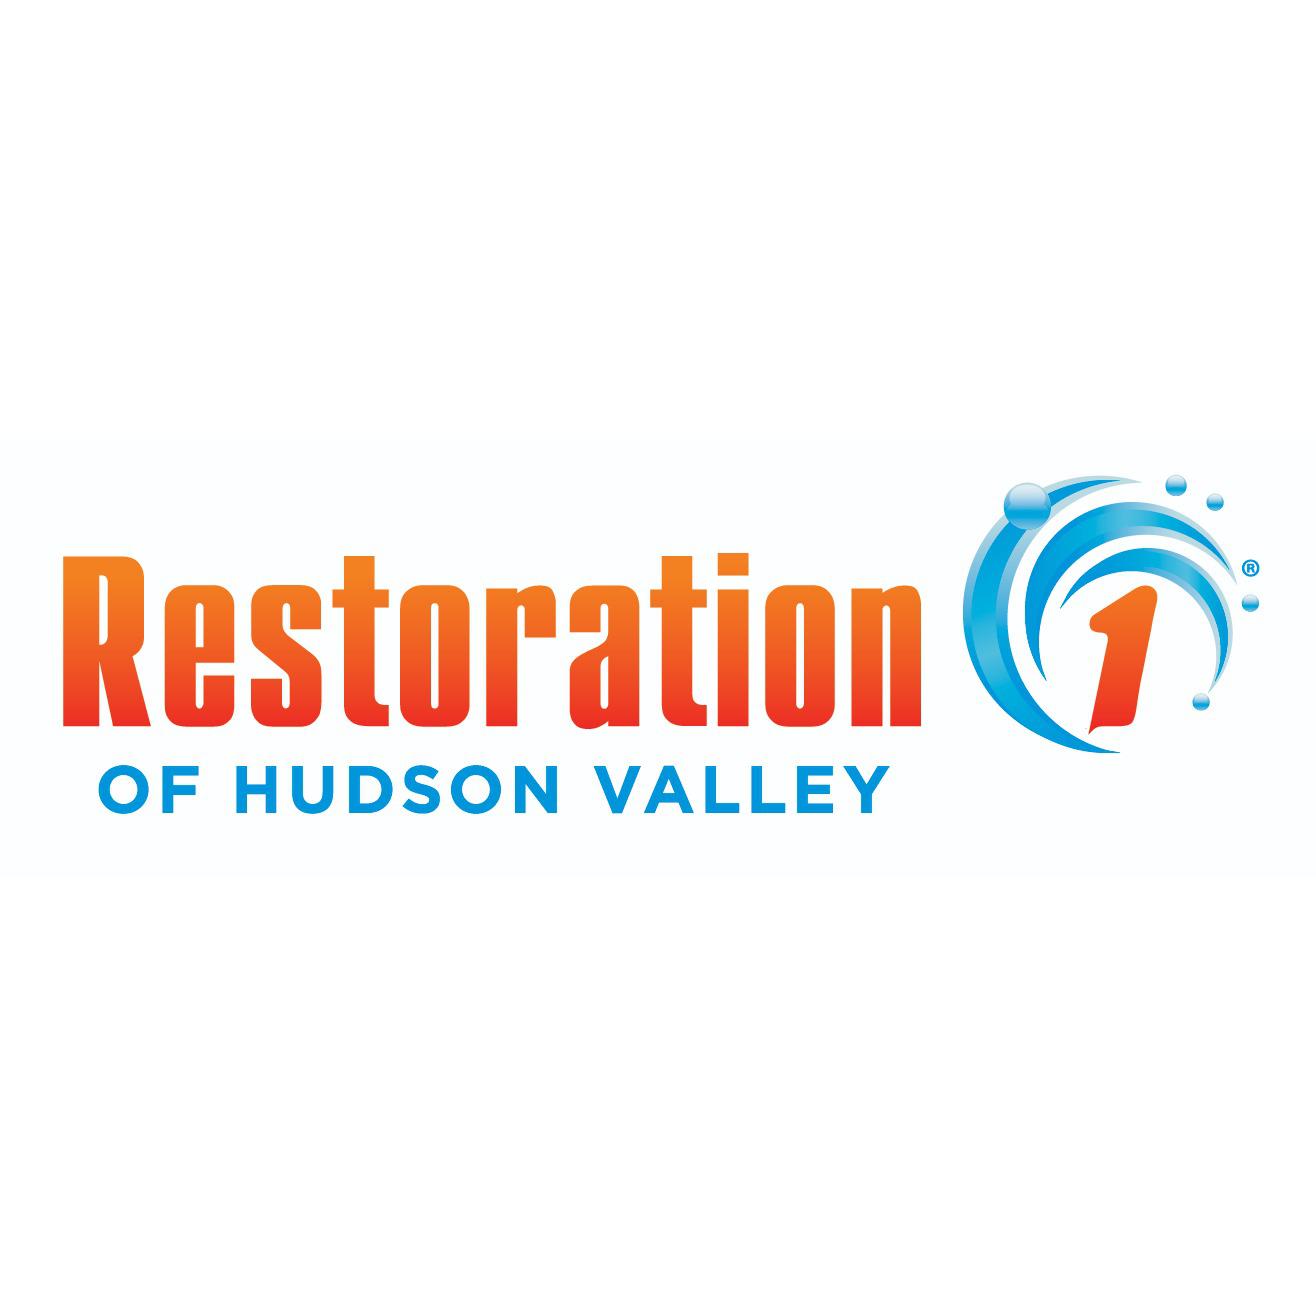 Restoration 1 of Hudson Valley